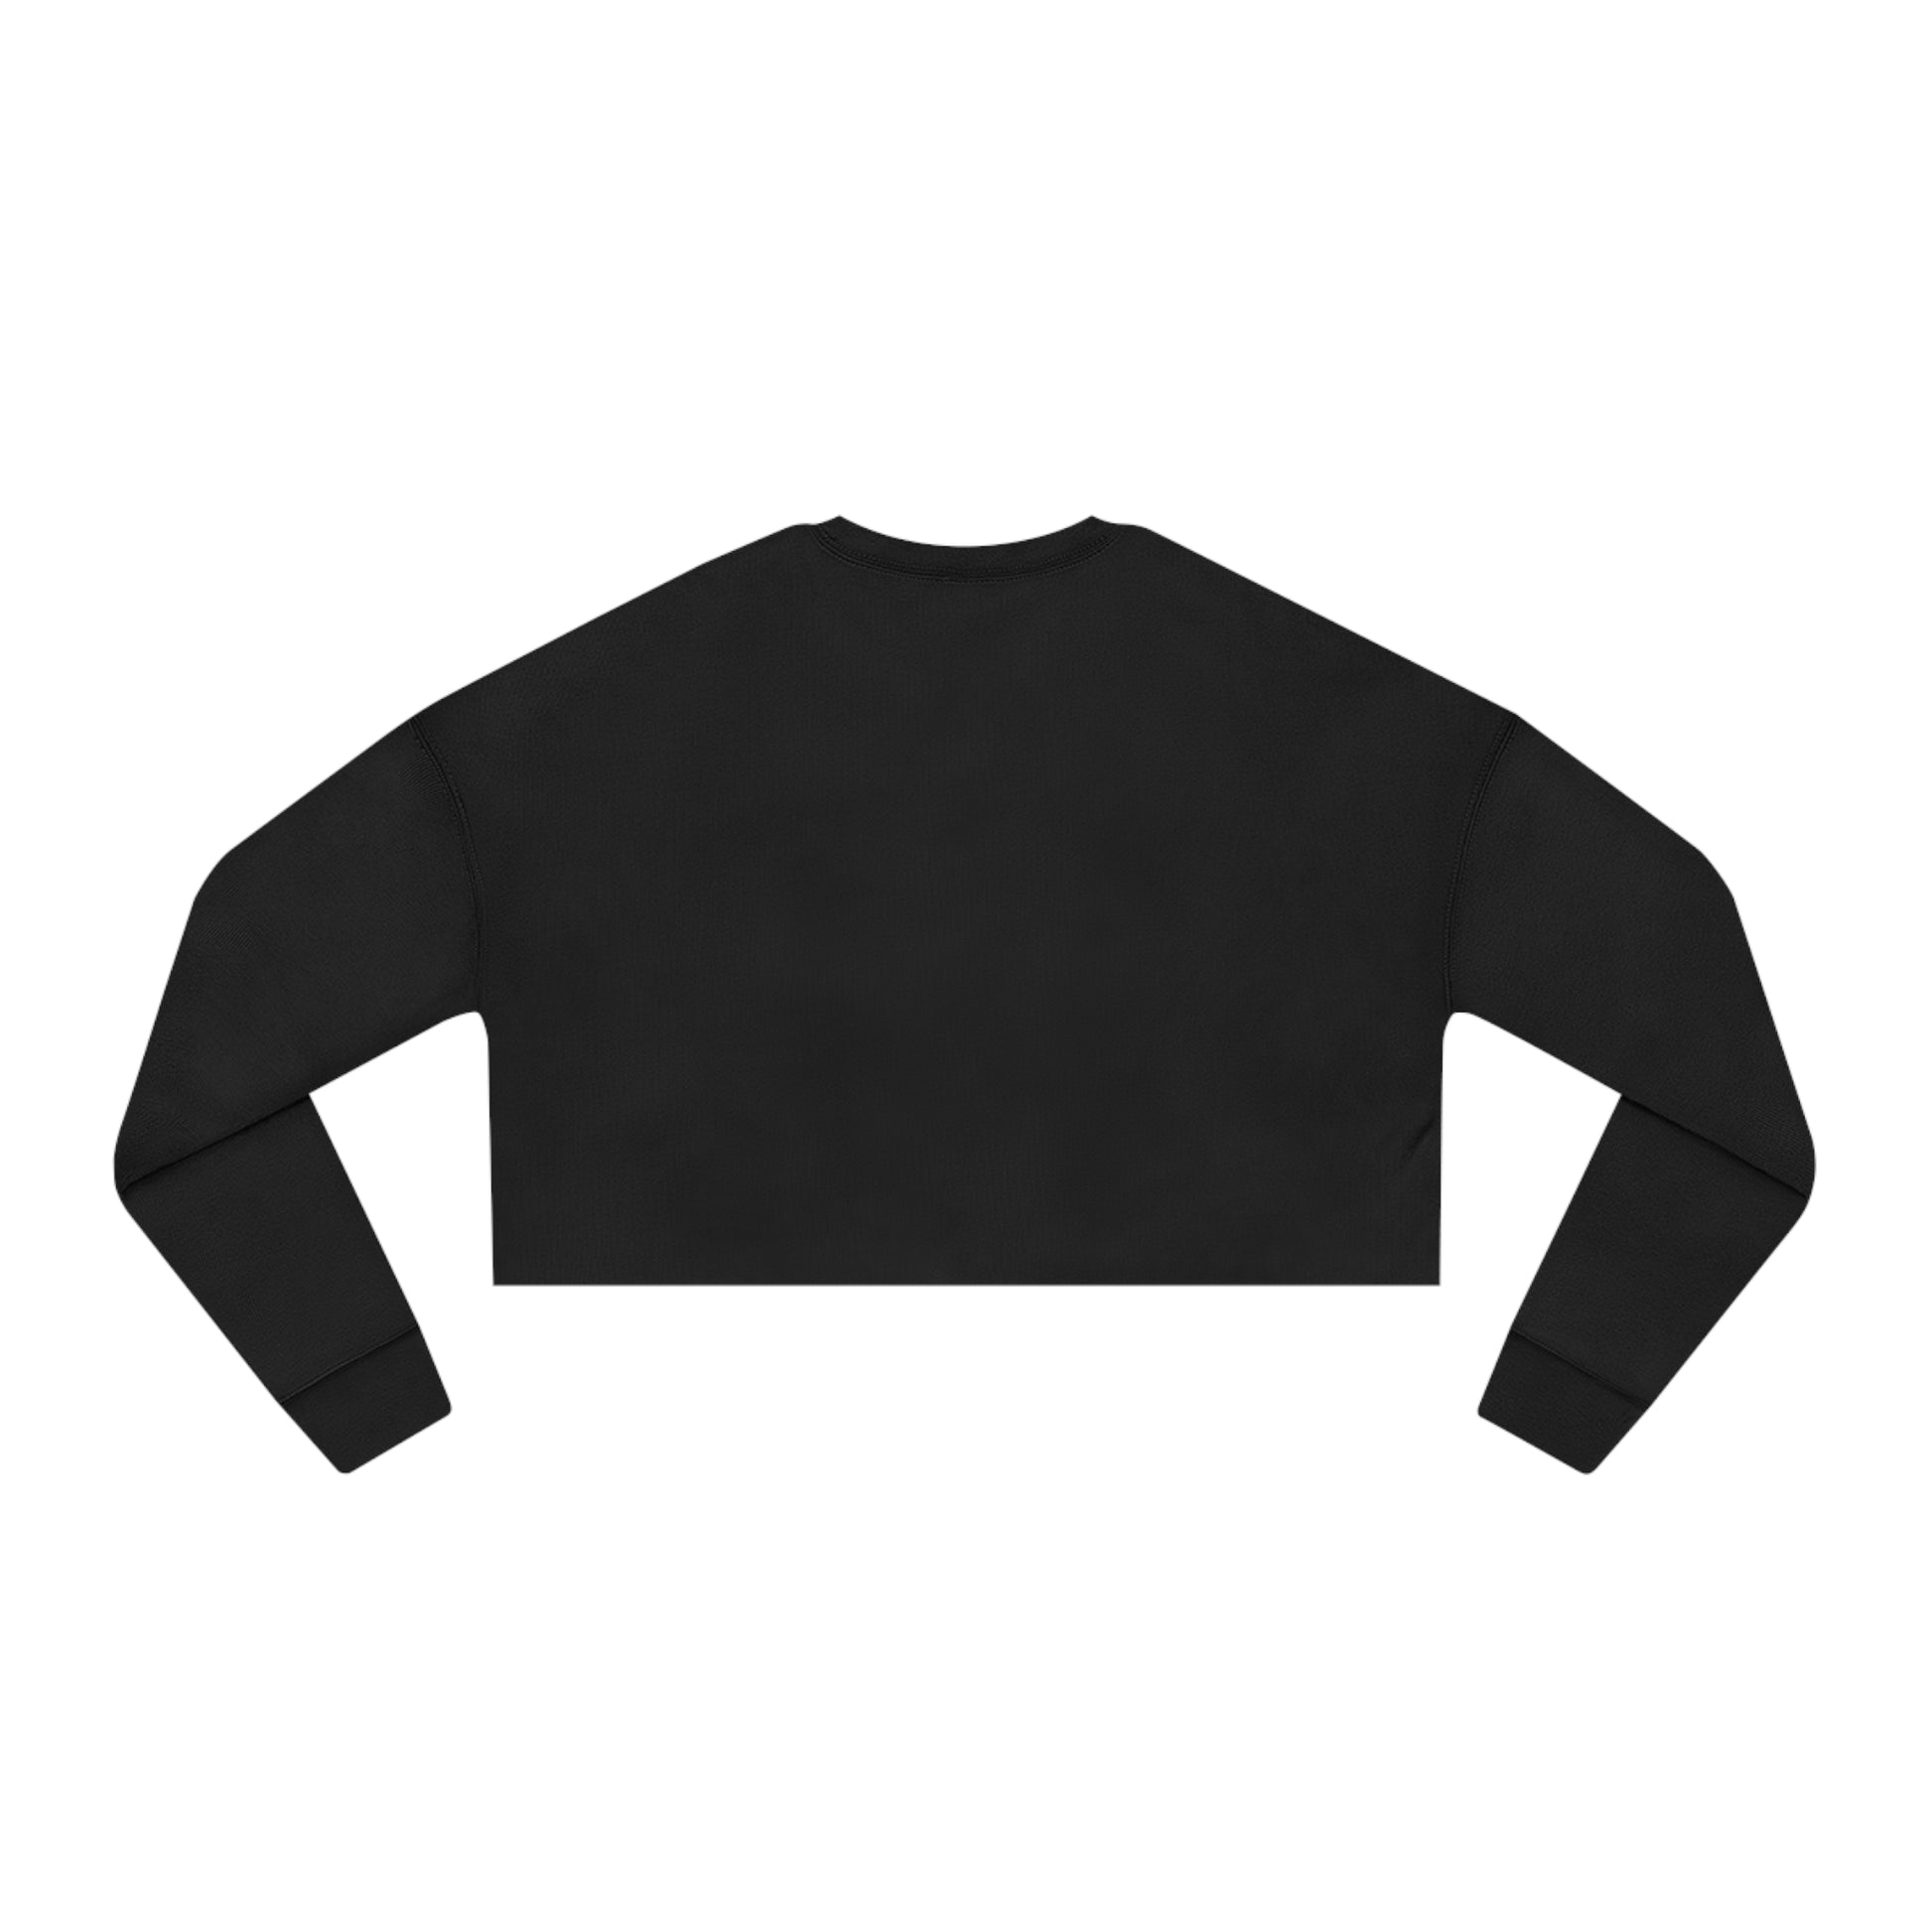 Kahuku Kai - Women's Cropped Sweatshirt - Fry1Productions